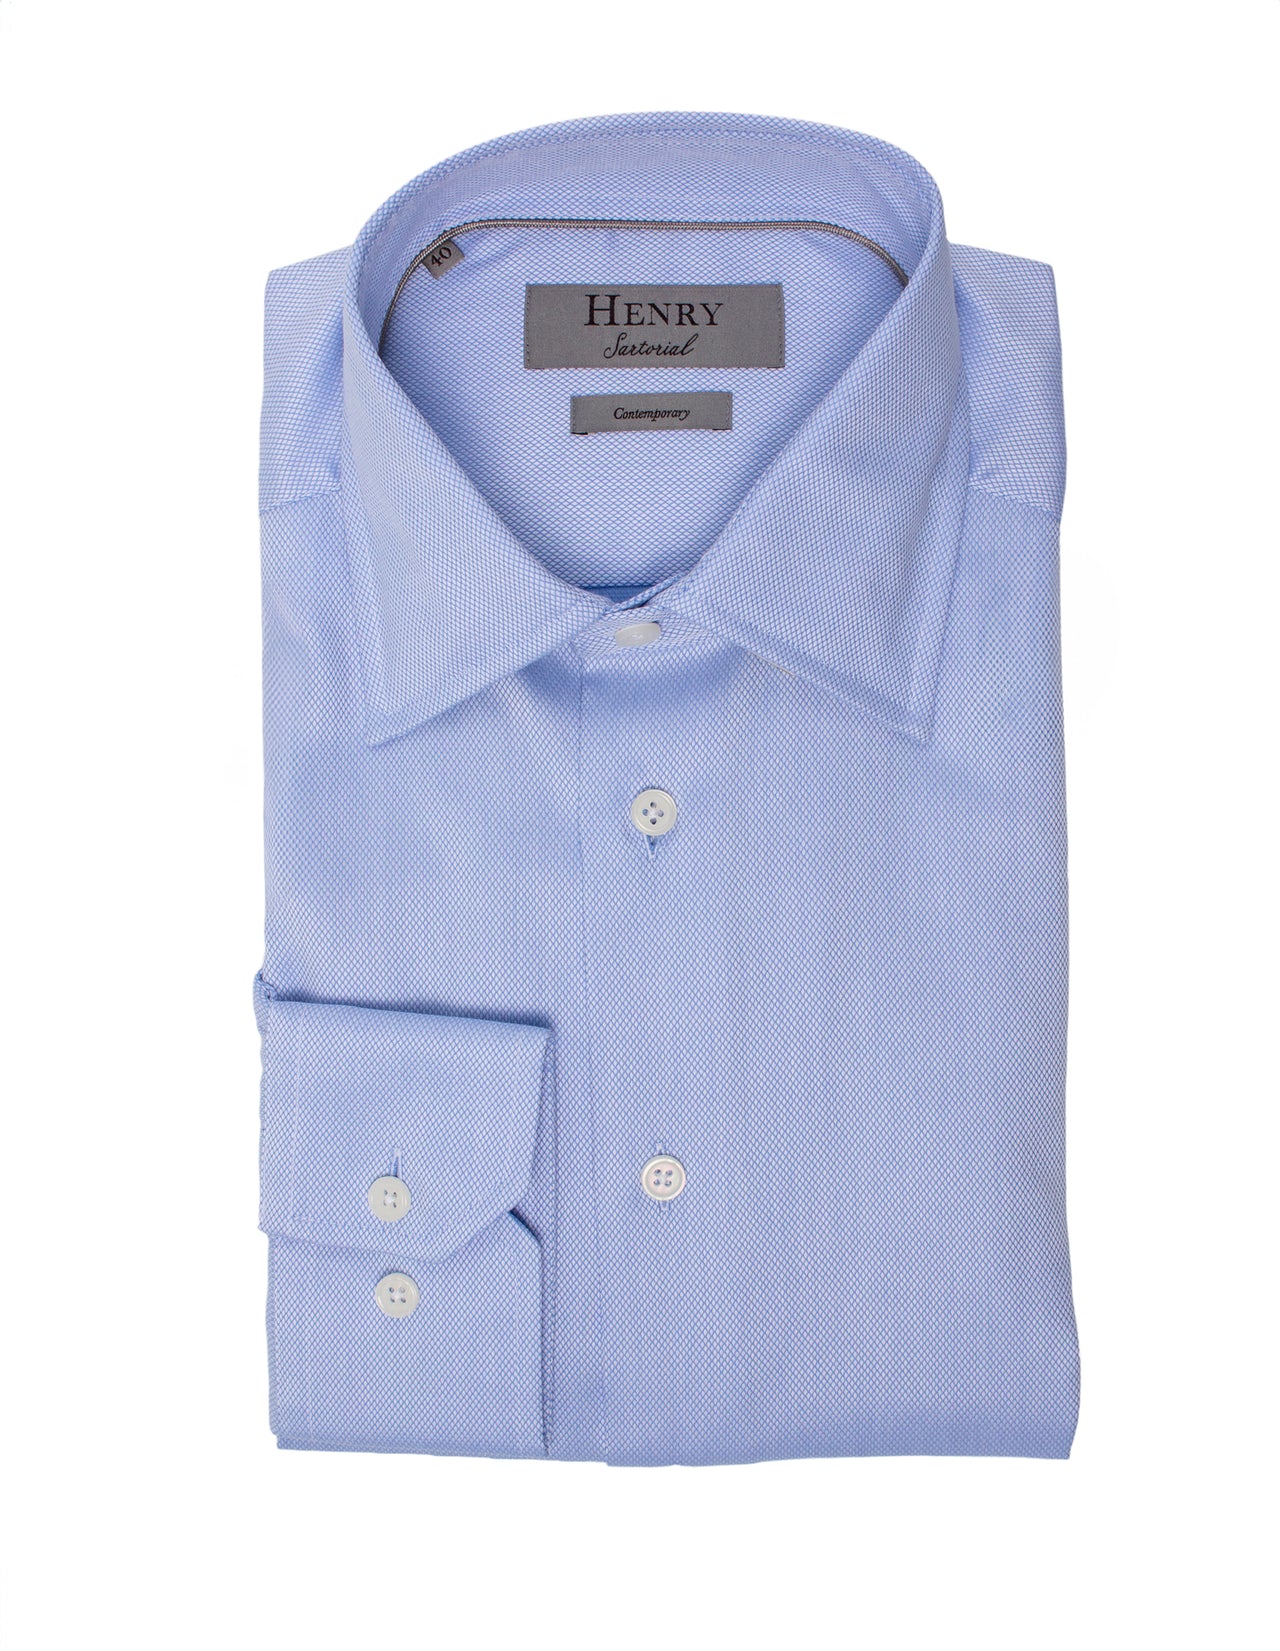 HENRY SARTORIAL Contemporary Fit Oxford Shirt BLUE